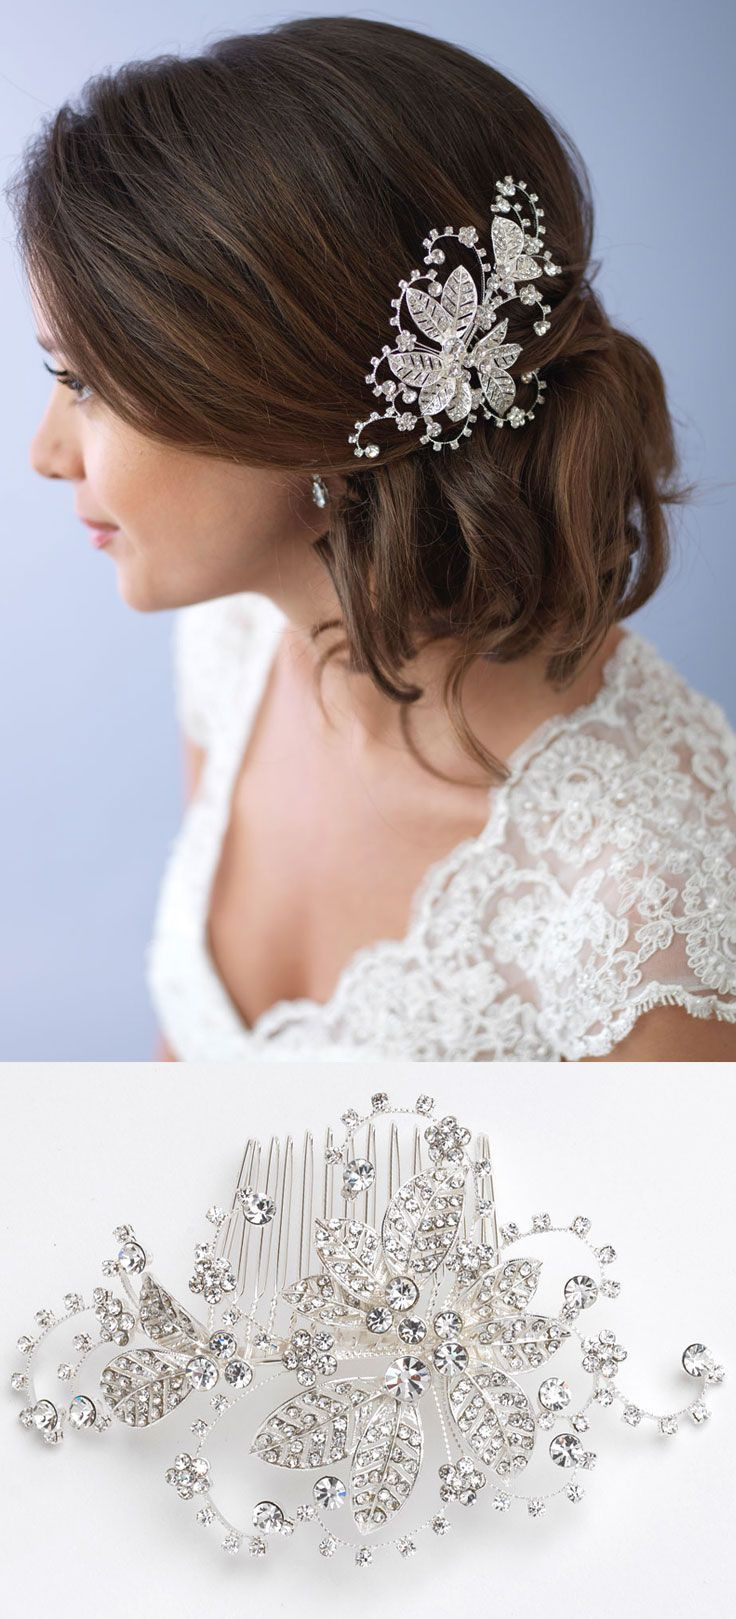 Wedding Hairstyles Side Bun
 Best 25 Bridal side bun ideas on Pinterest